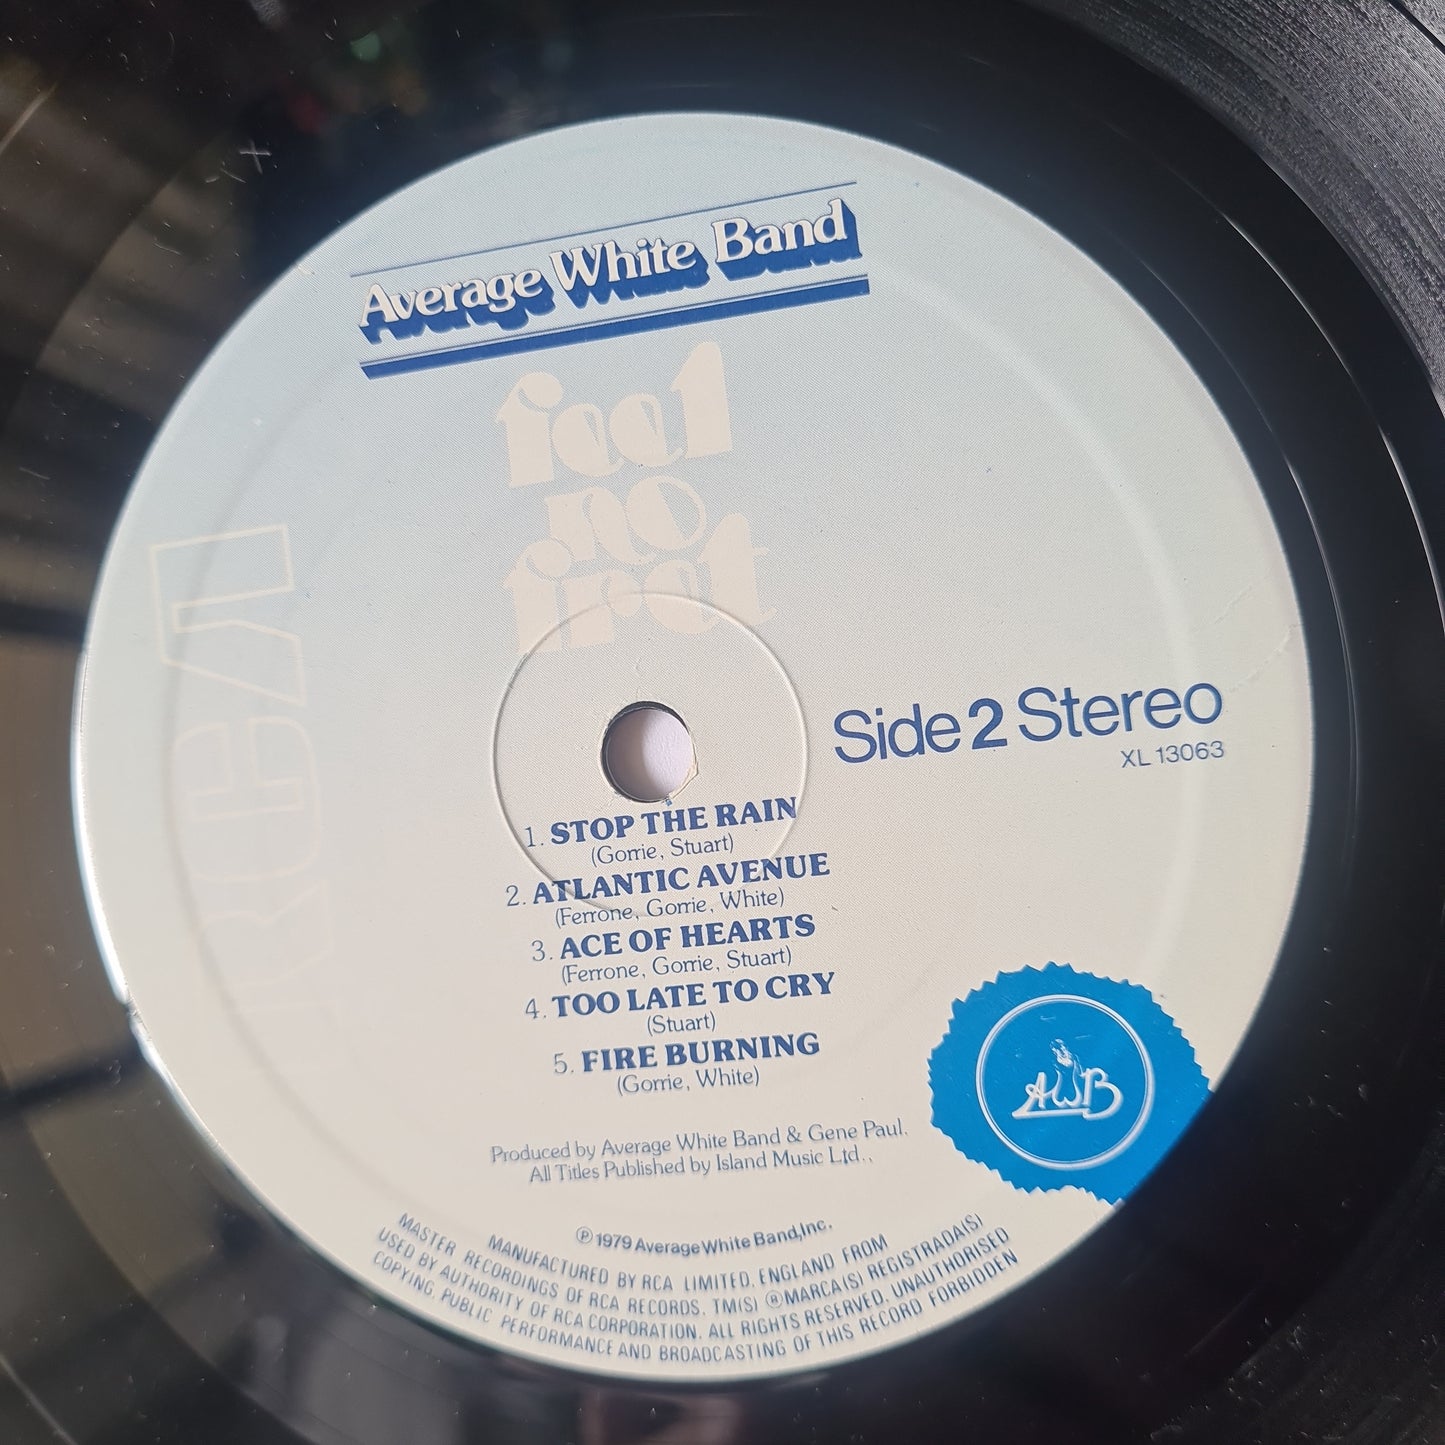 Average White Band – Feel No Fret - 1979 - Vinyl Record